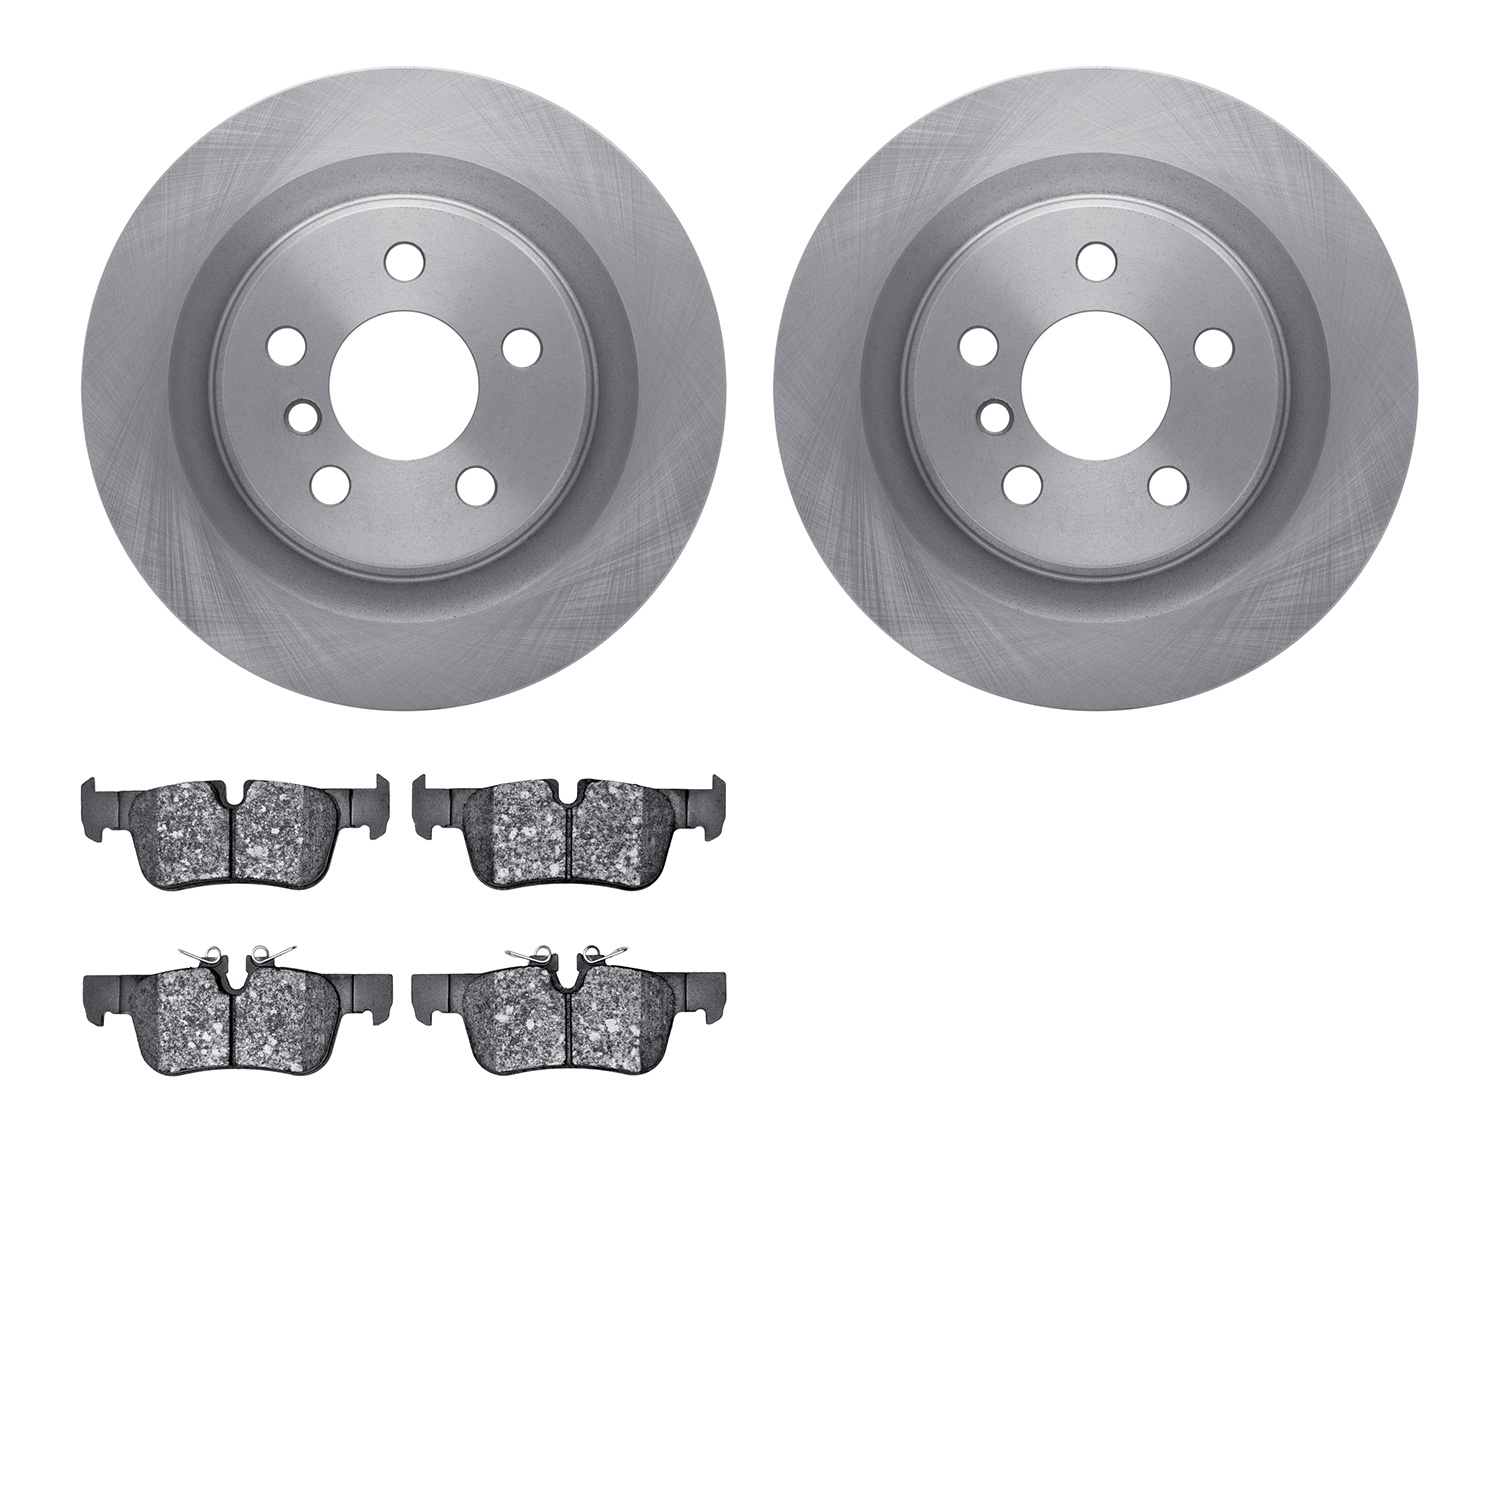 6502-31723 Brake Rotors w/5000 Advanced Brake Pads Kit, Fits Select Multiple Makes/Models, Position: Rear